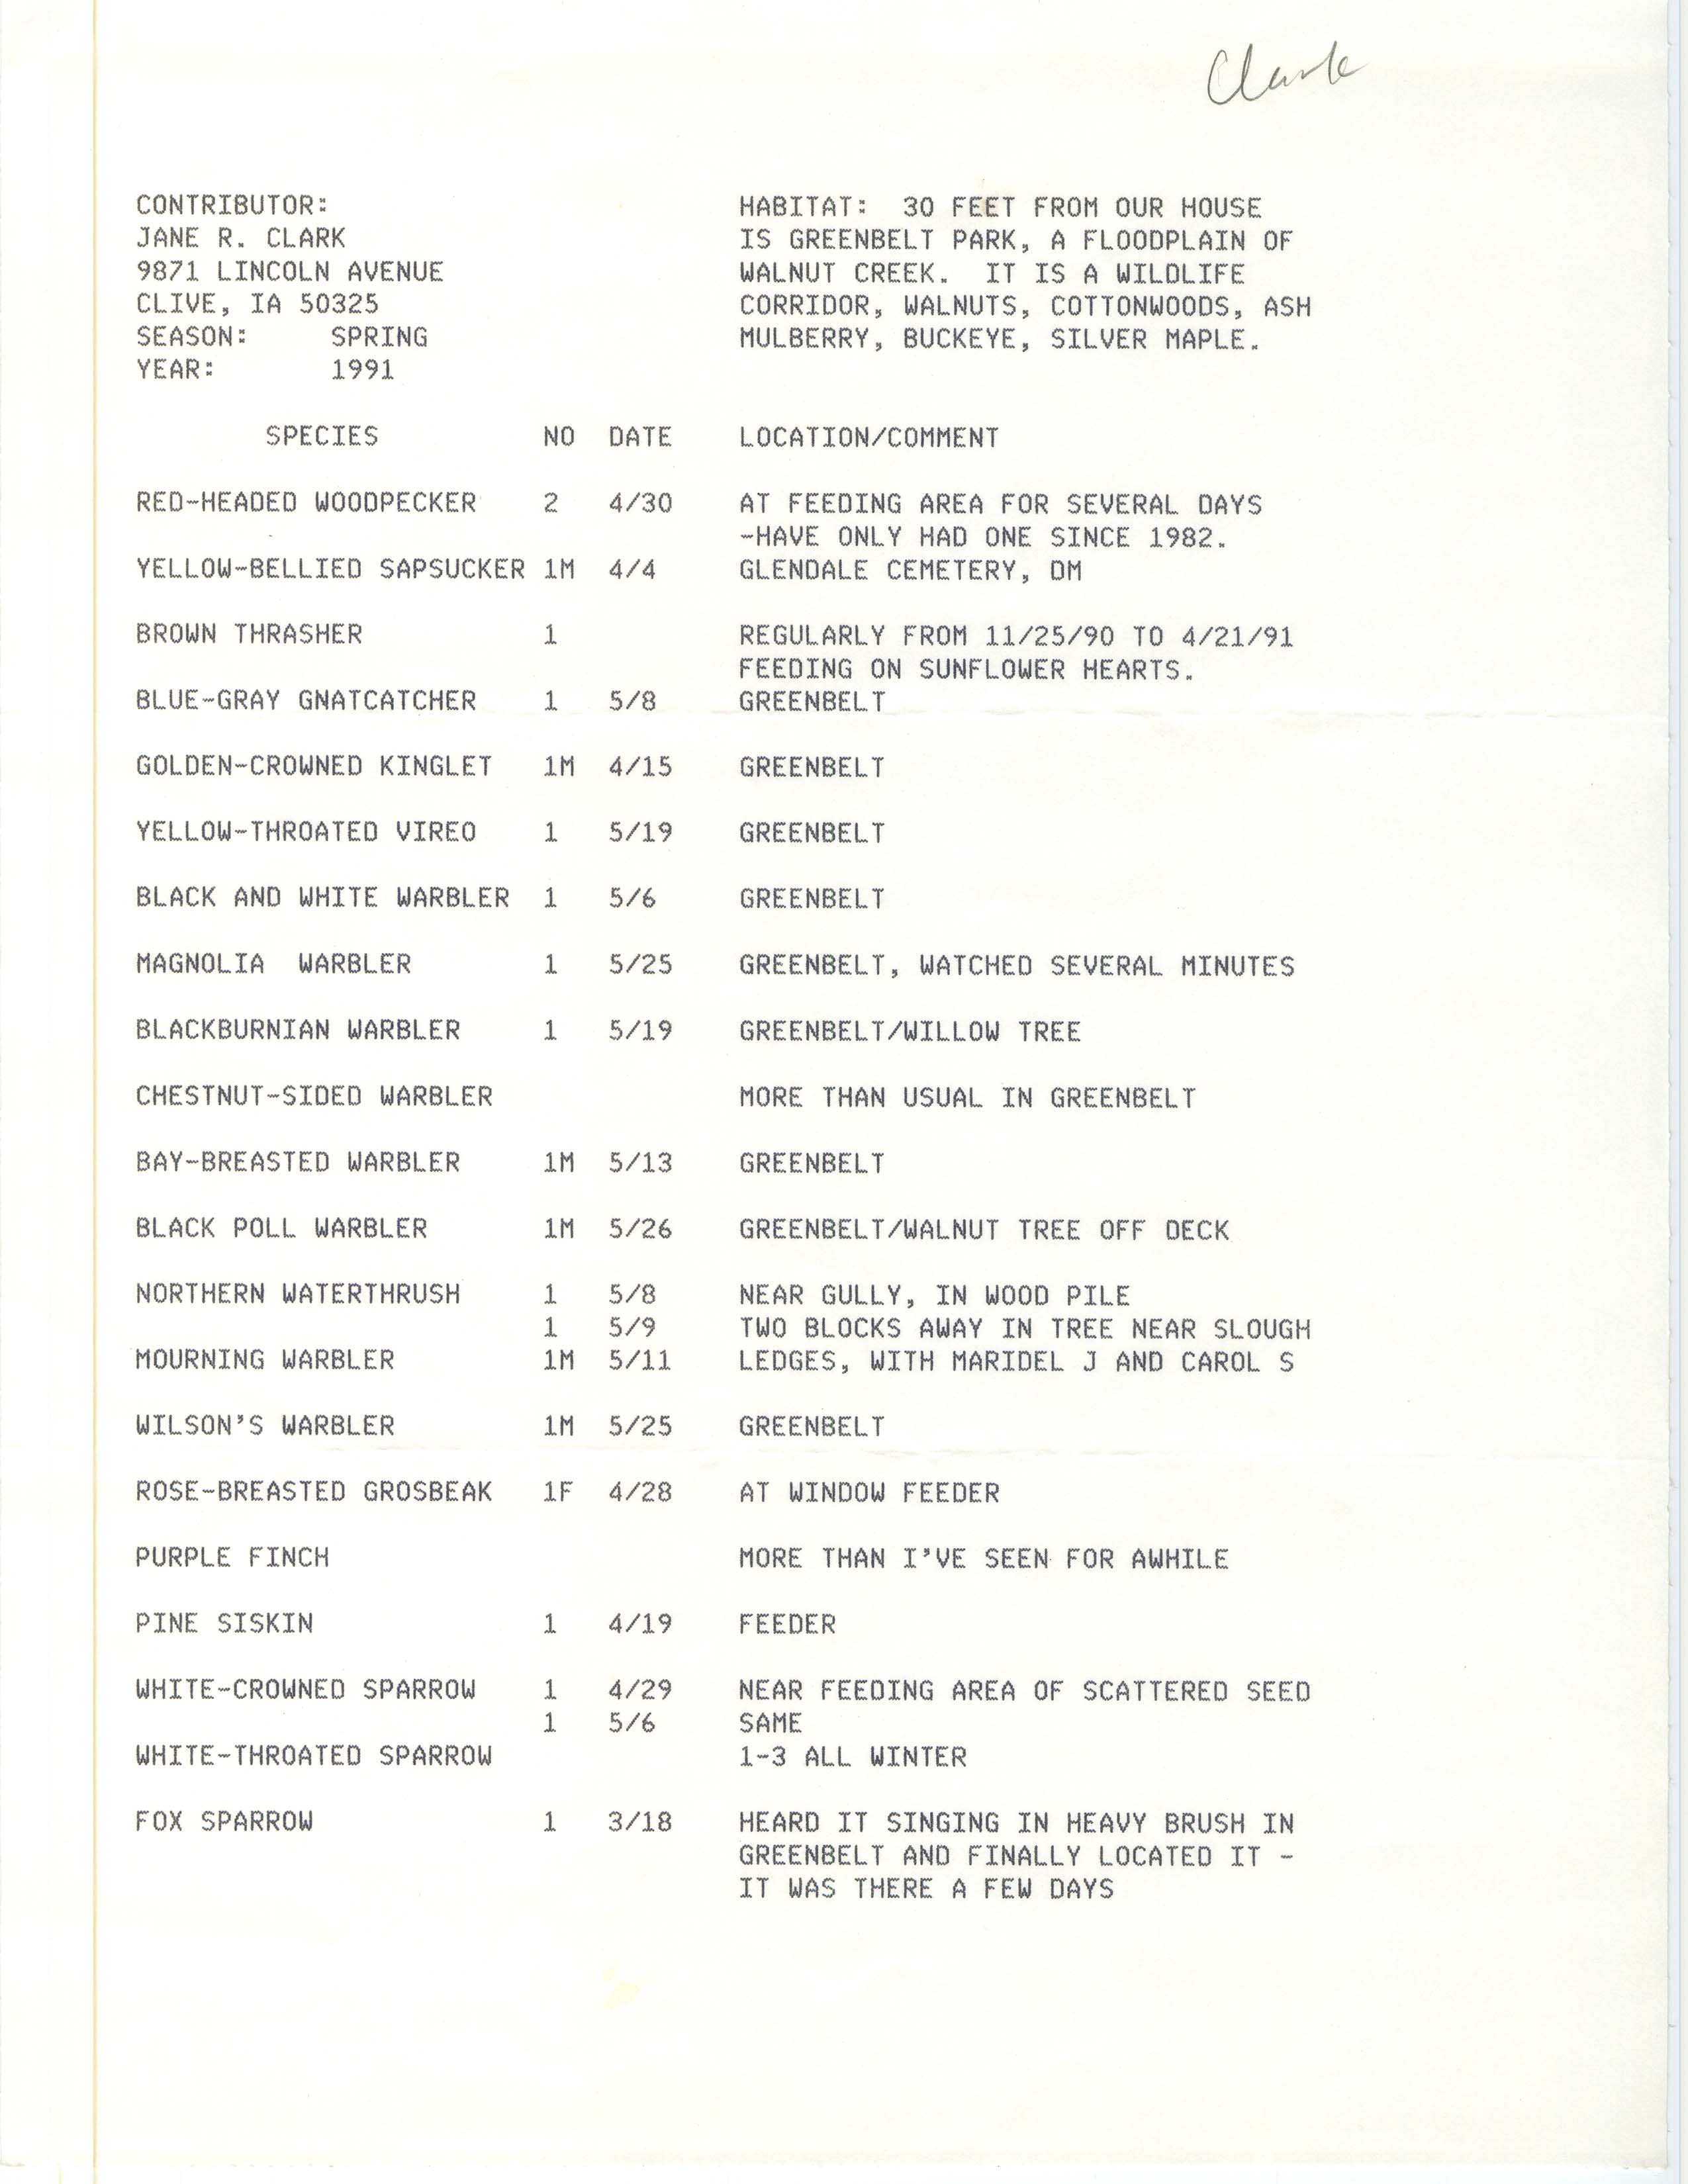 Field reports, Jane R. Clark, spring 1991